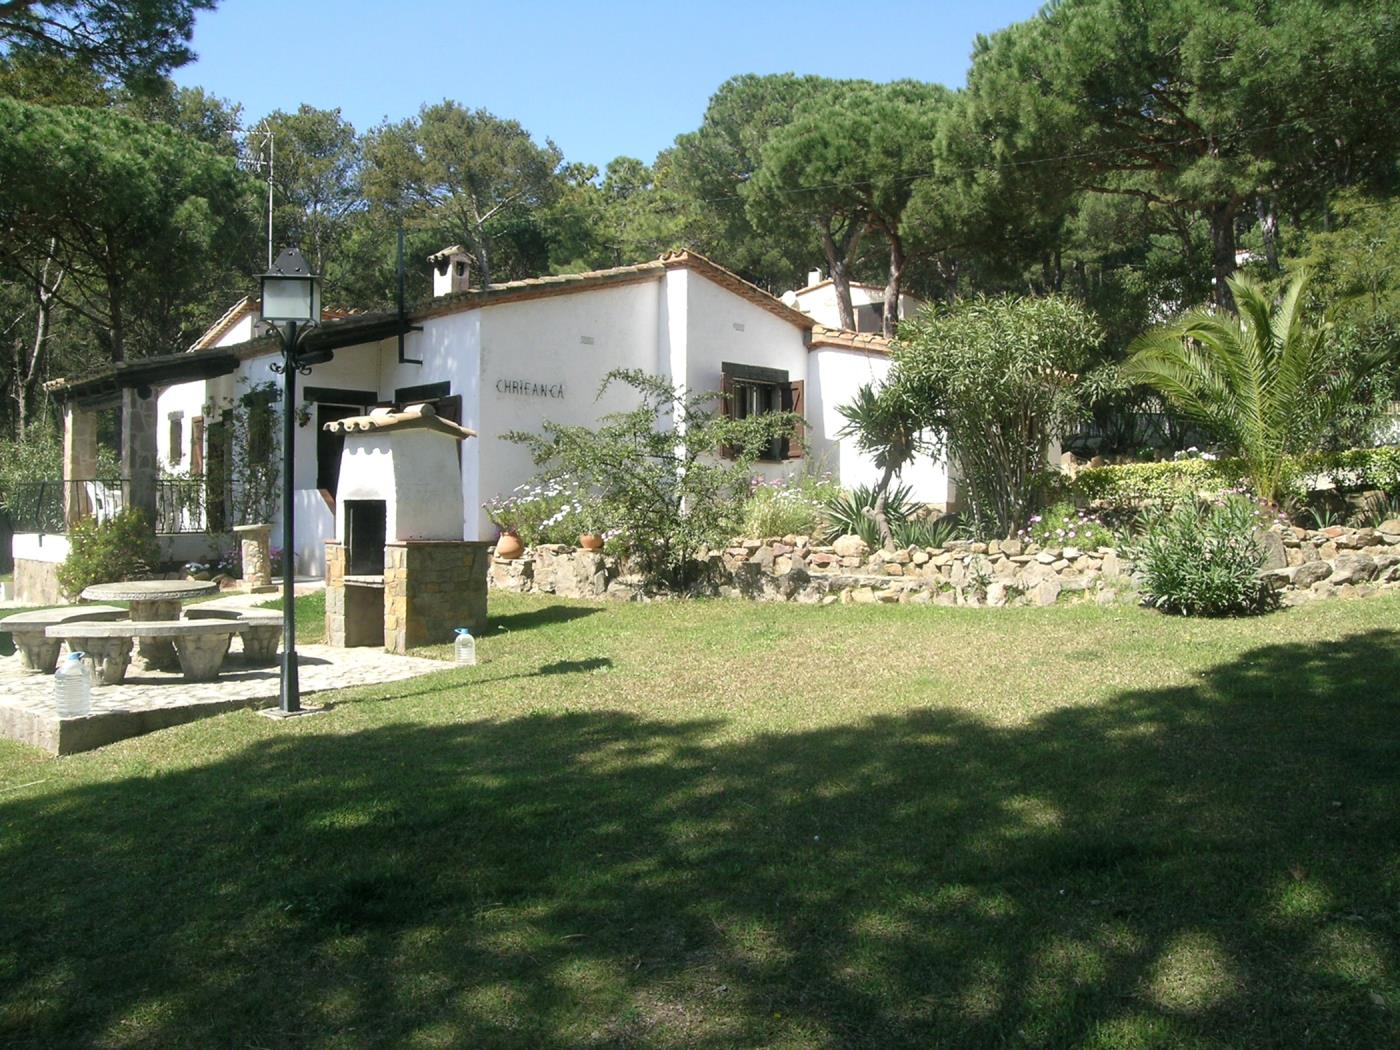 Casa Chifranca, Begur, Costa Brava in begur